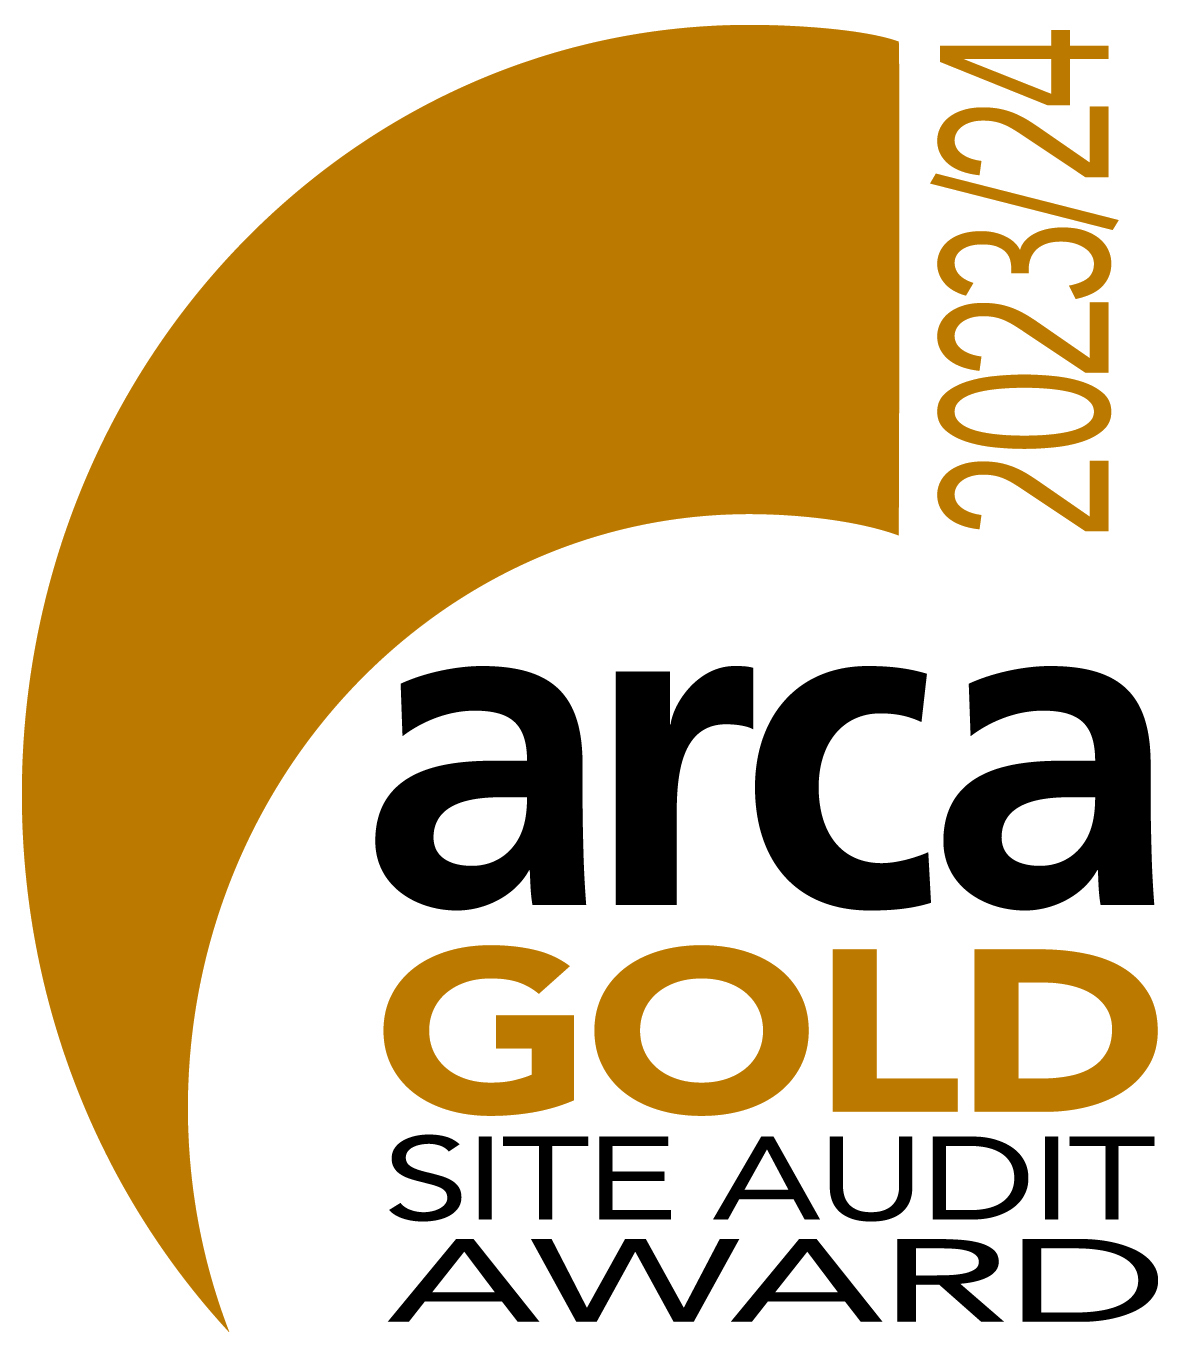 ARCA Gold Site Audit Award 2023/2024 awarded on 31st Oct 2023